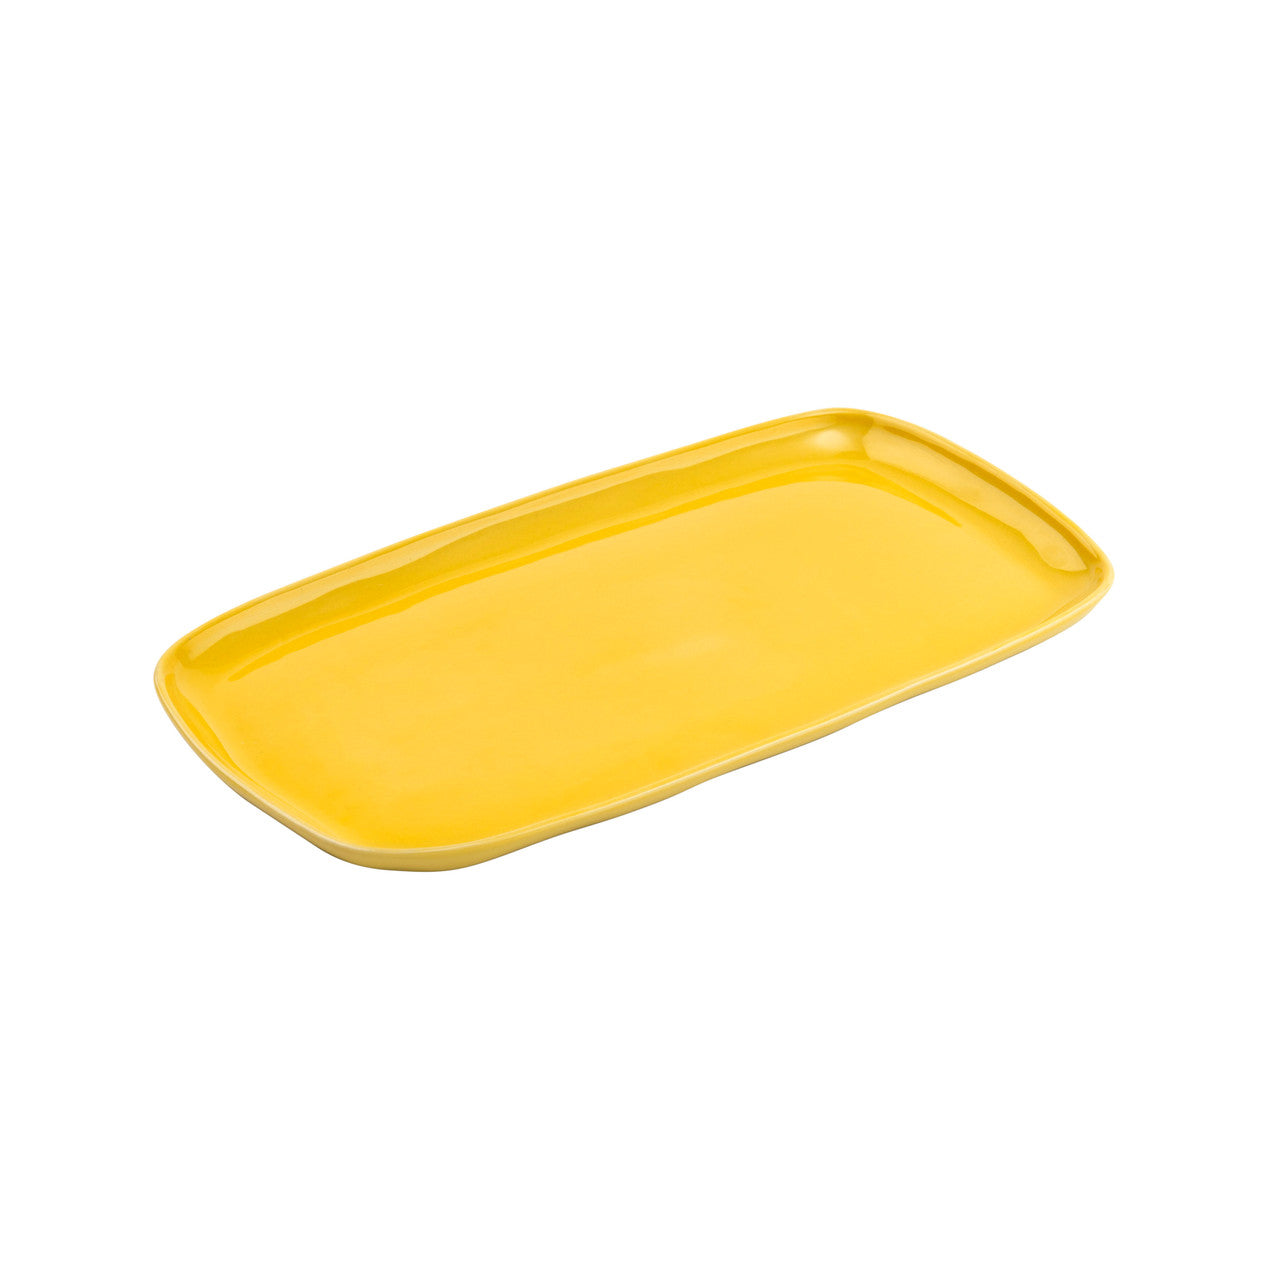 Ceramic Antipasti Plate Yellow